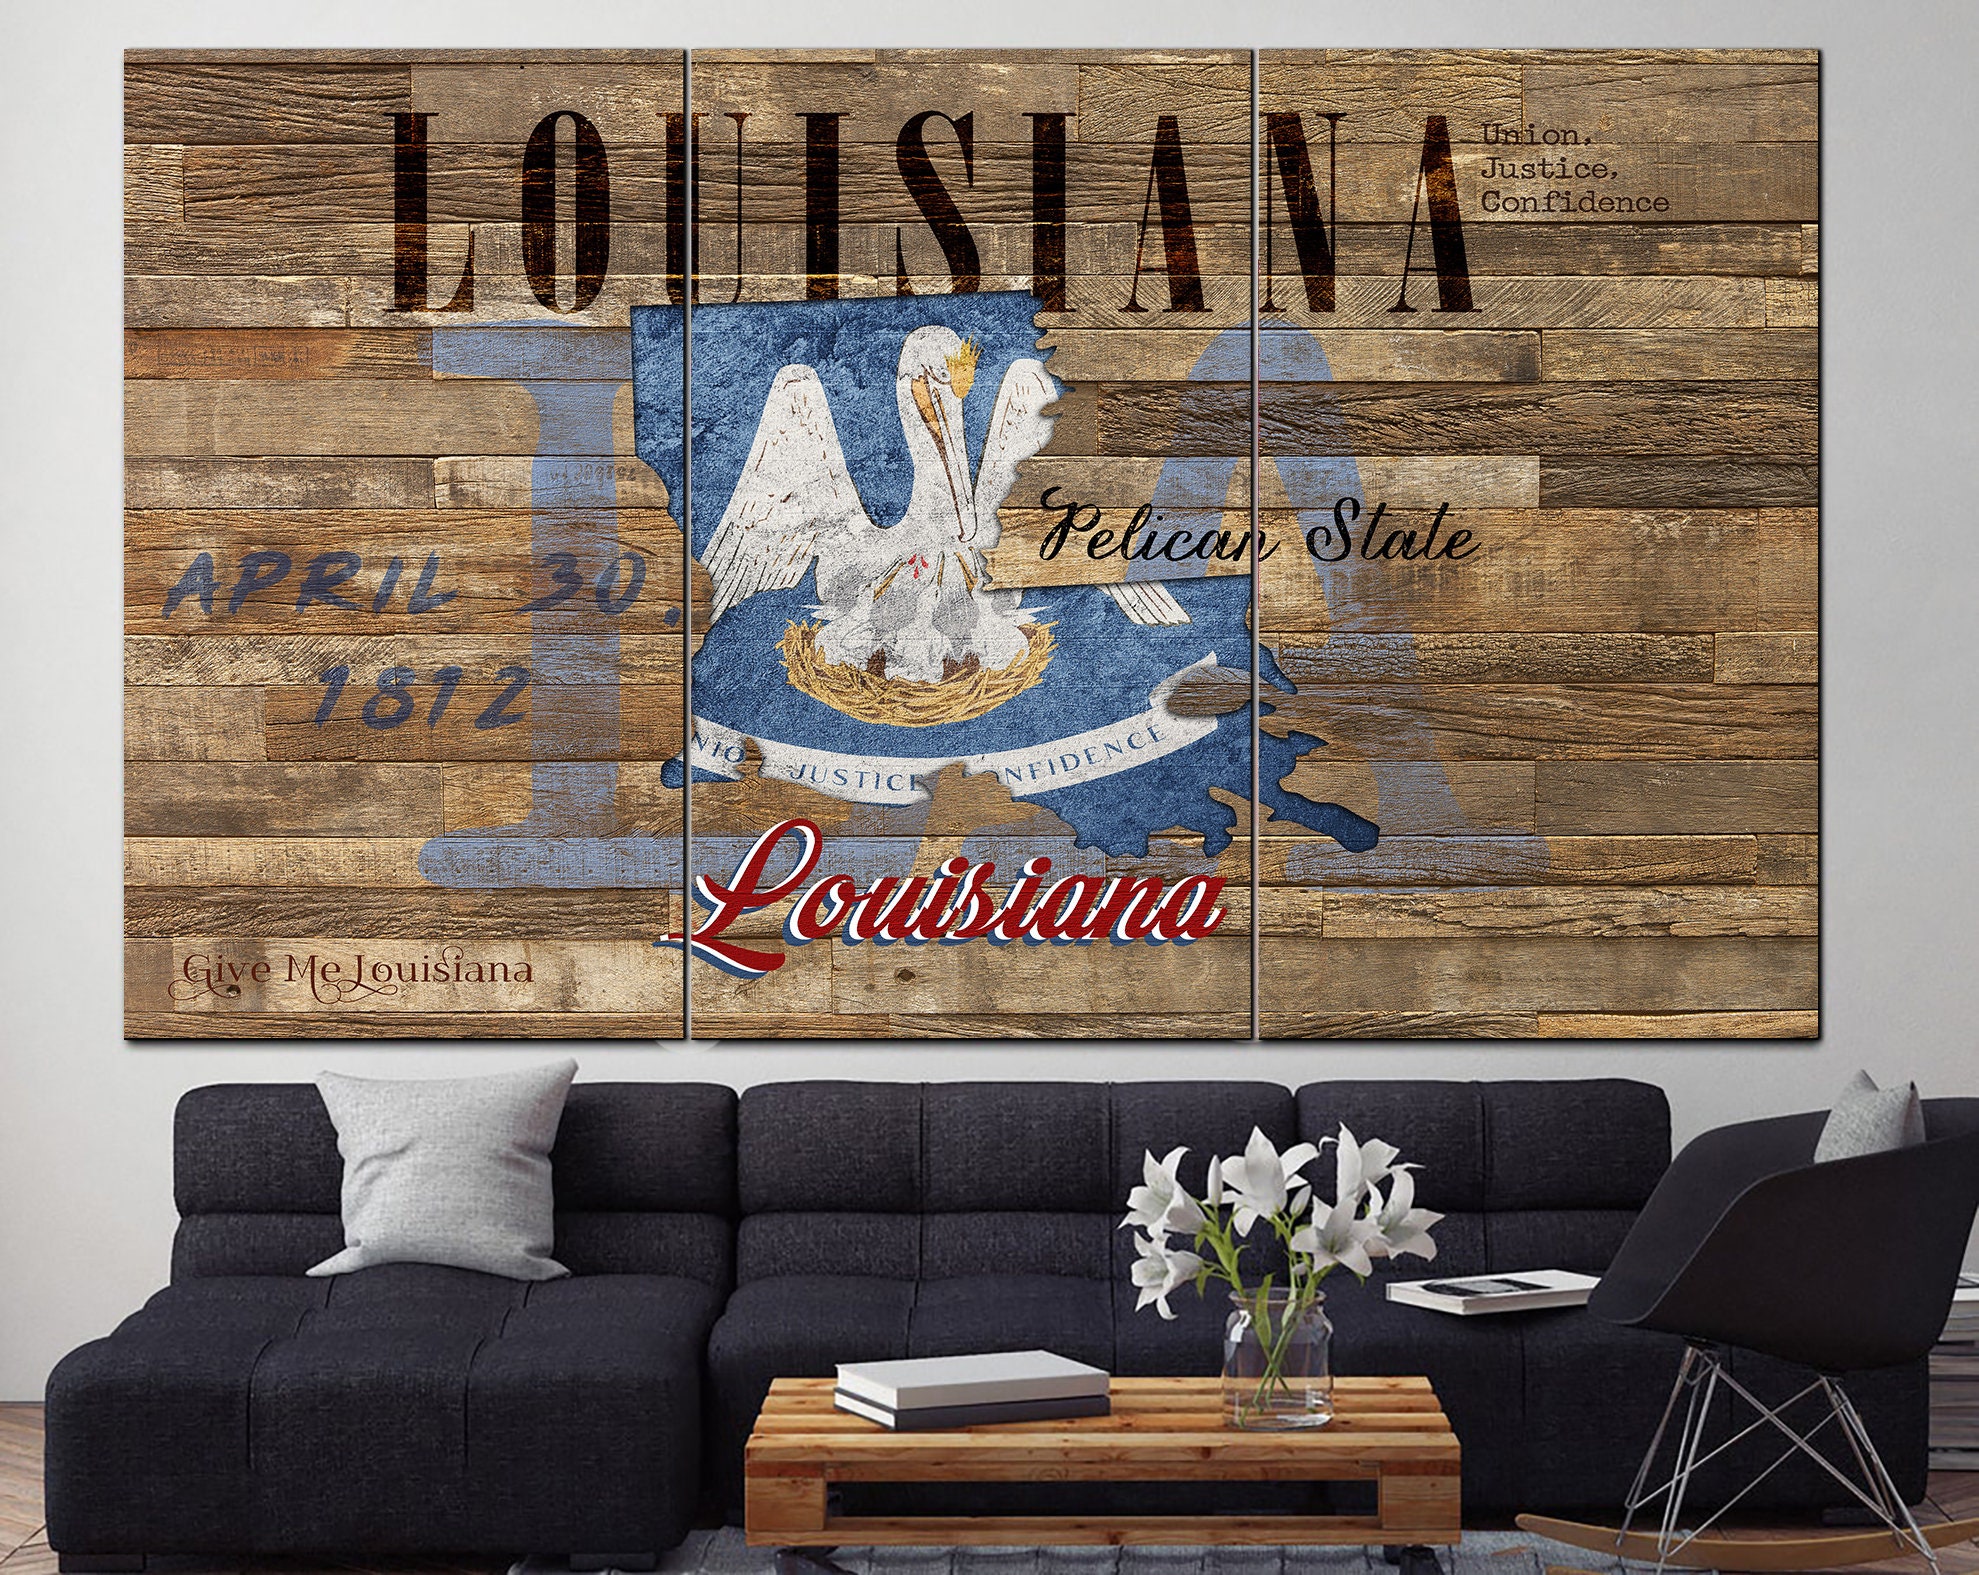 Louisiana Map Art with Flag Design Kids T-Shirt by World Art Prints And  Designs - Fine Art America